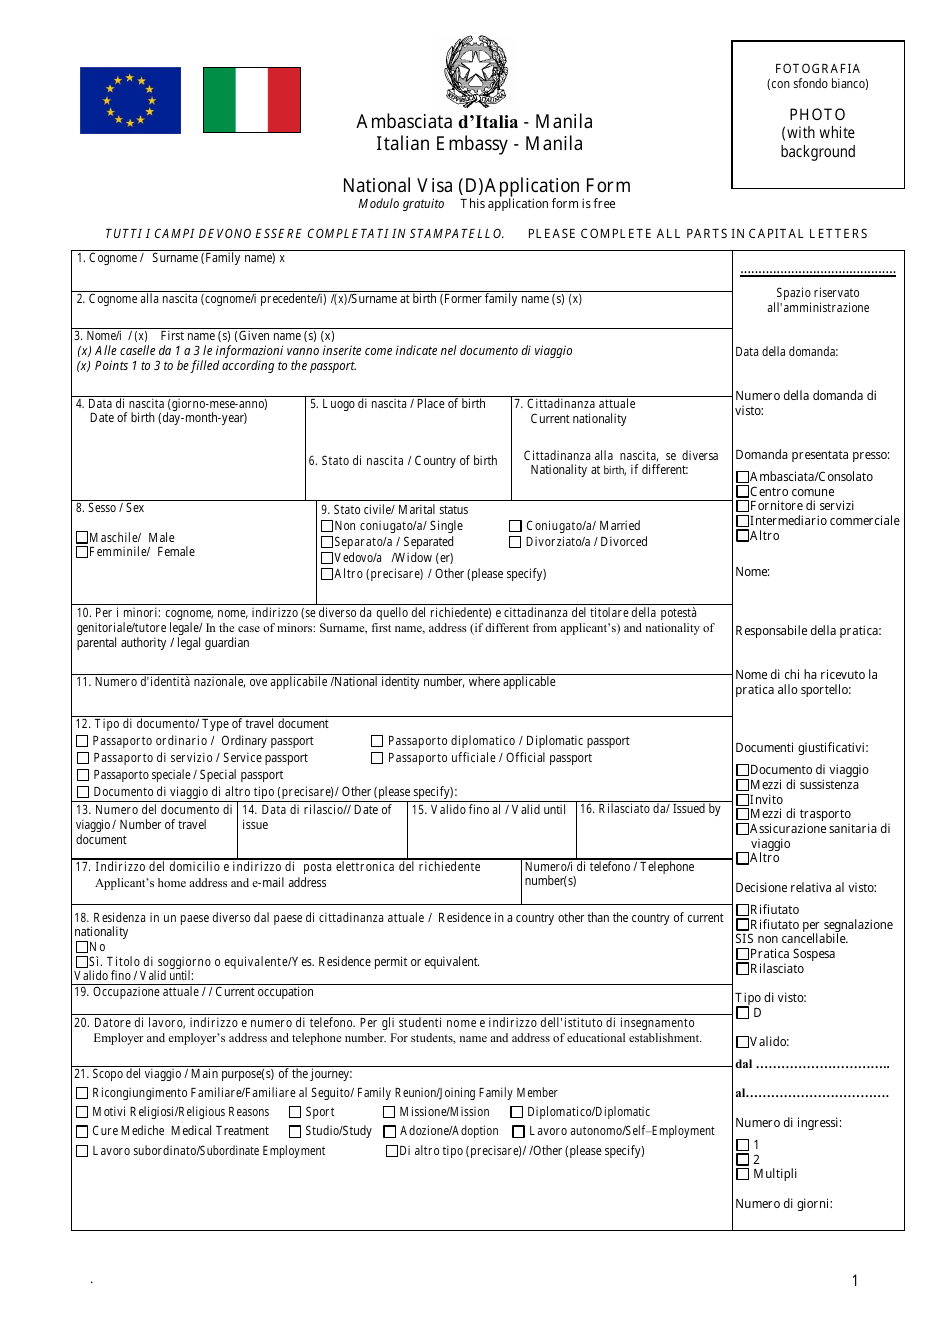 Italian National Visa (D) Application Form - Italian Embassy - Manila, Philippines, Page 1